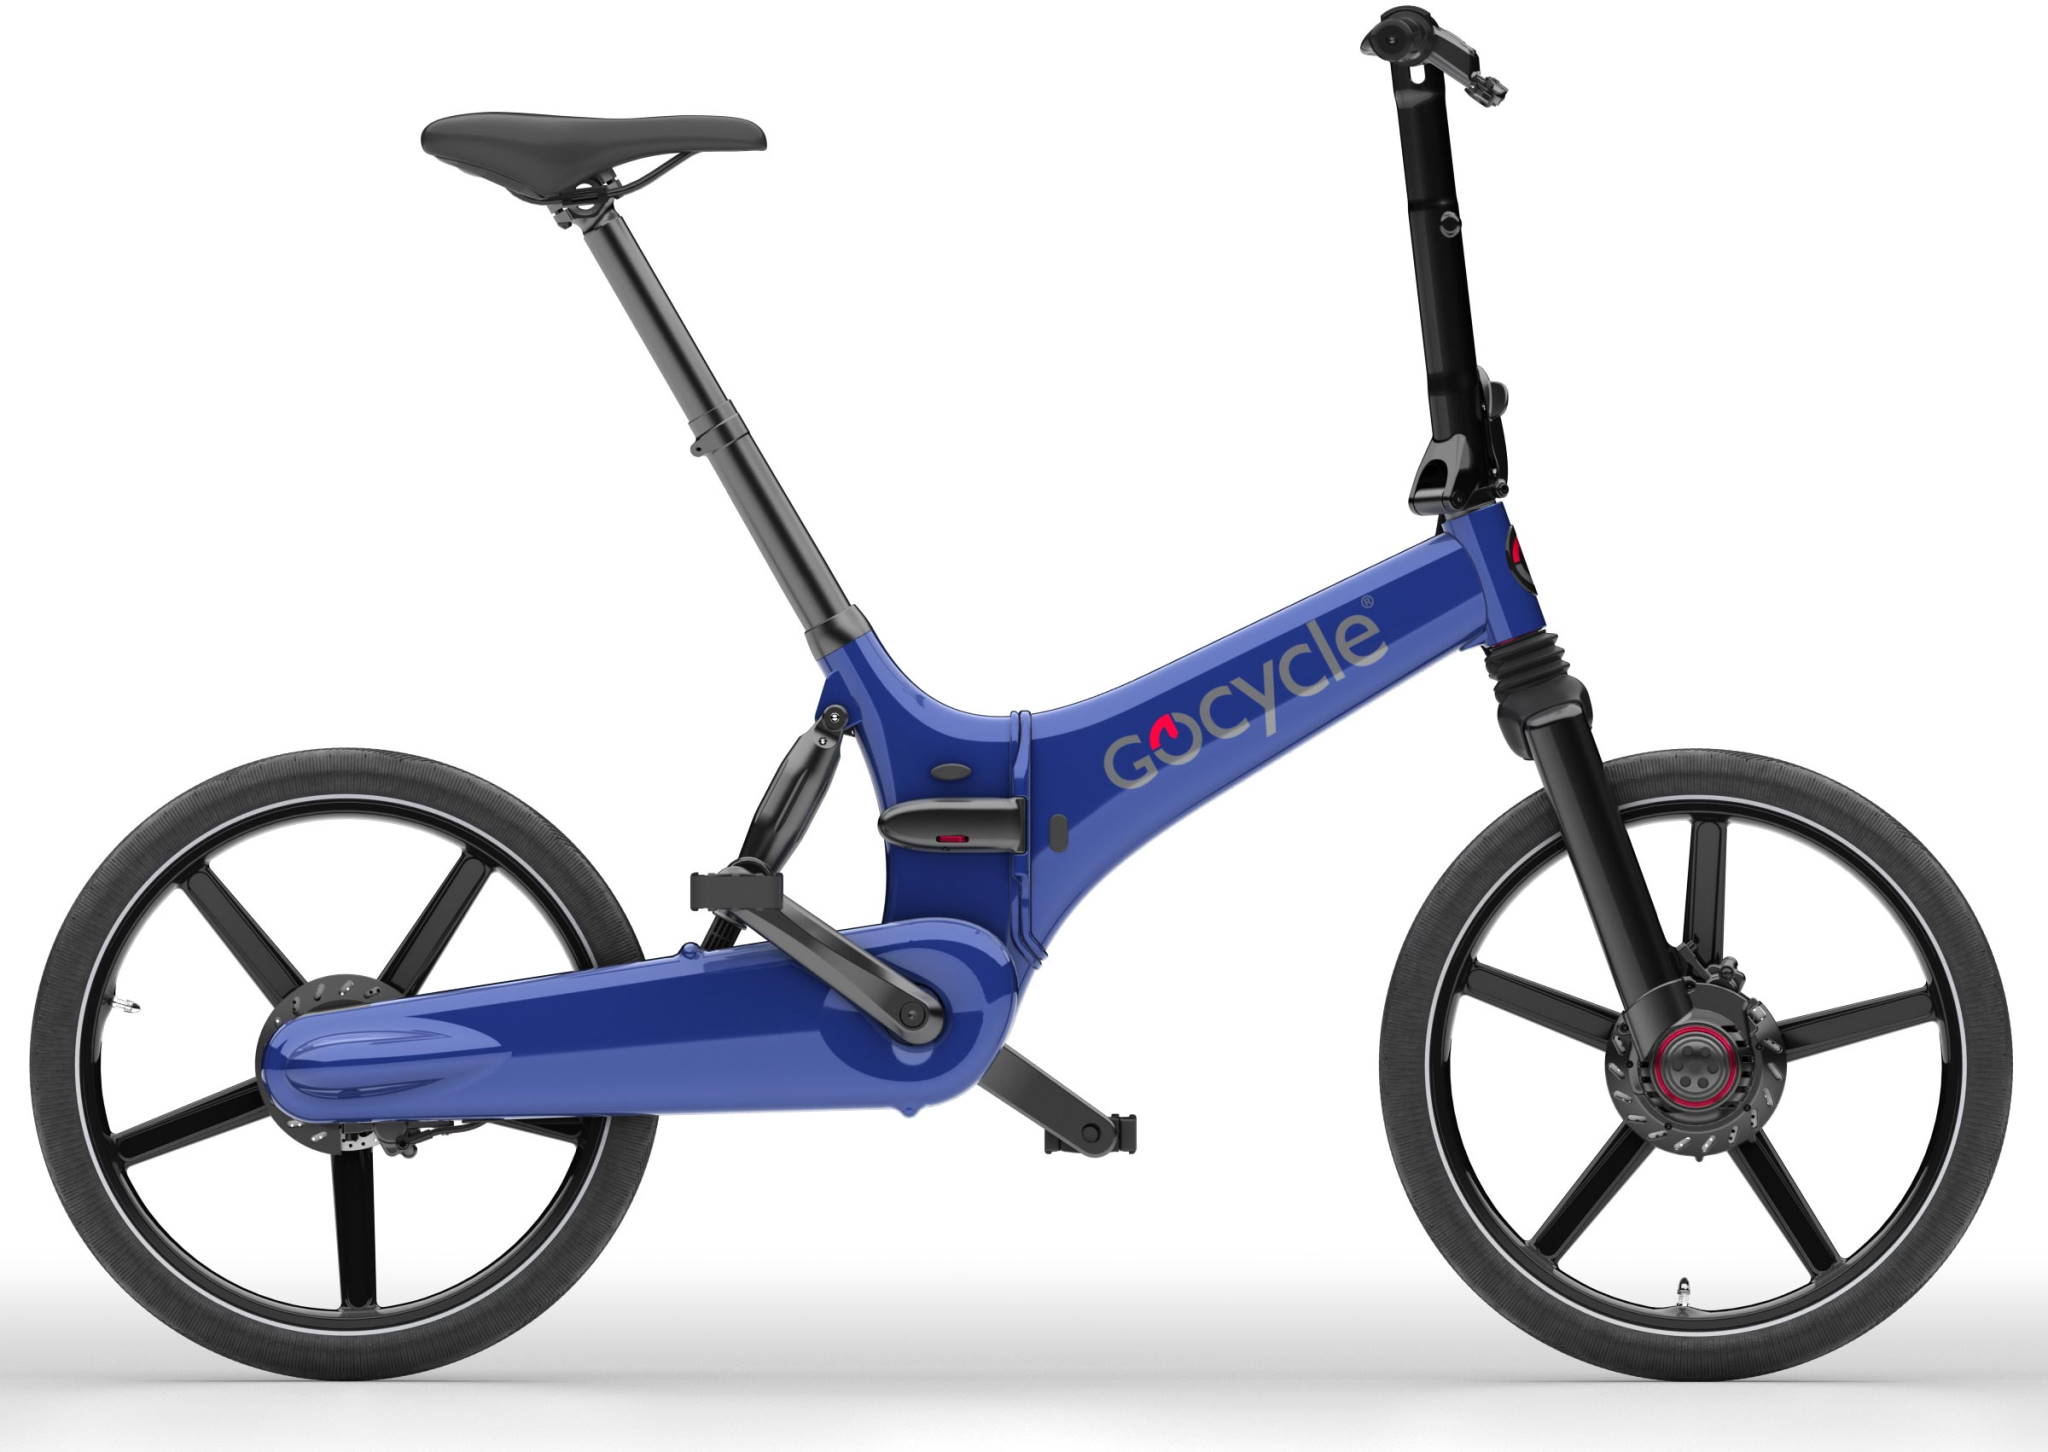 Gocycle GX 2020